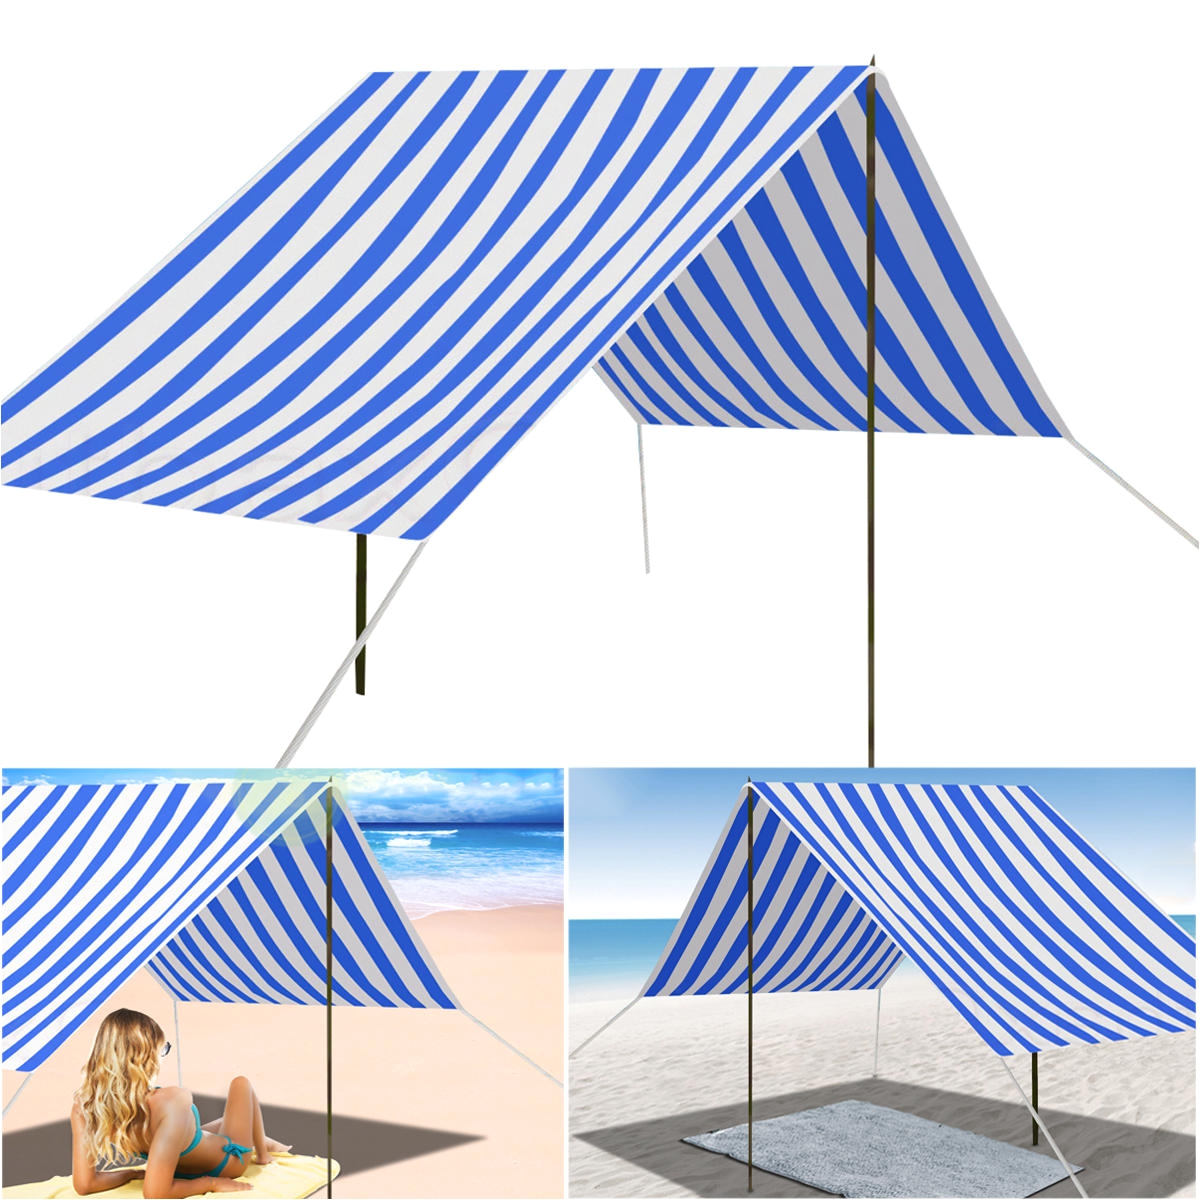 330x180cm portable beach tent uv sun shade shelter canopy outdoor picnic camping